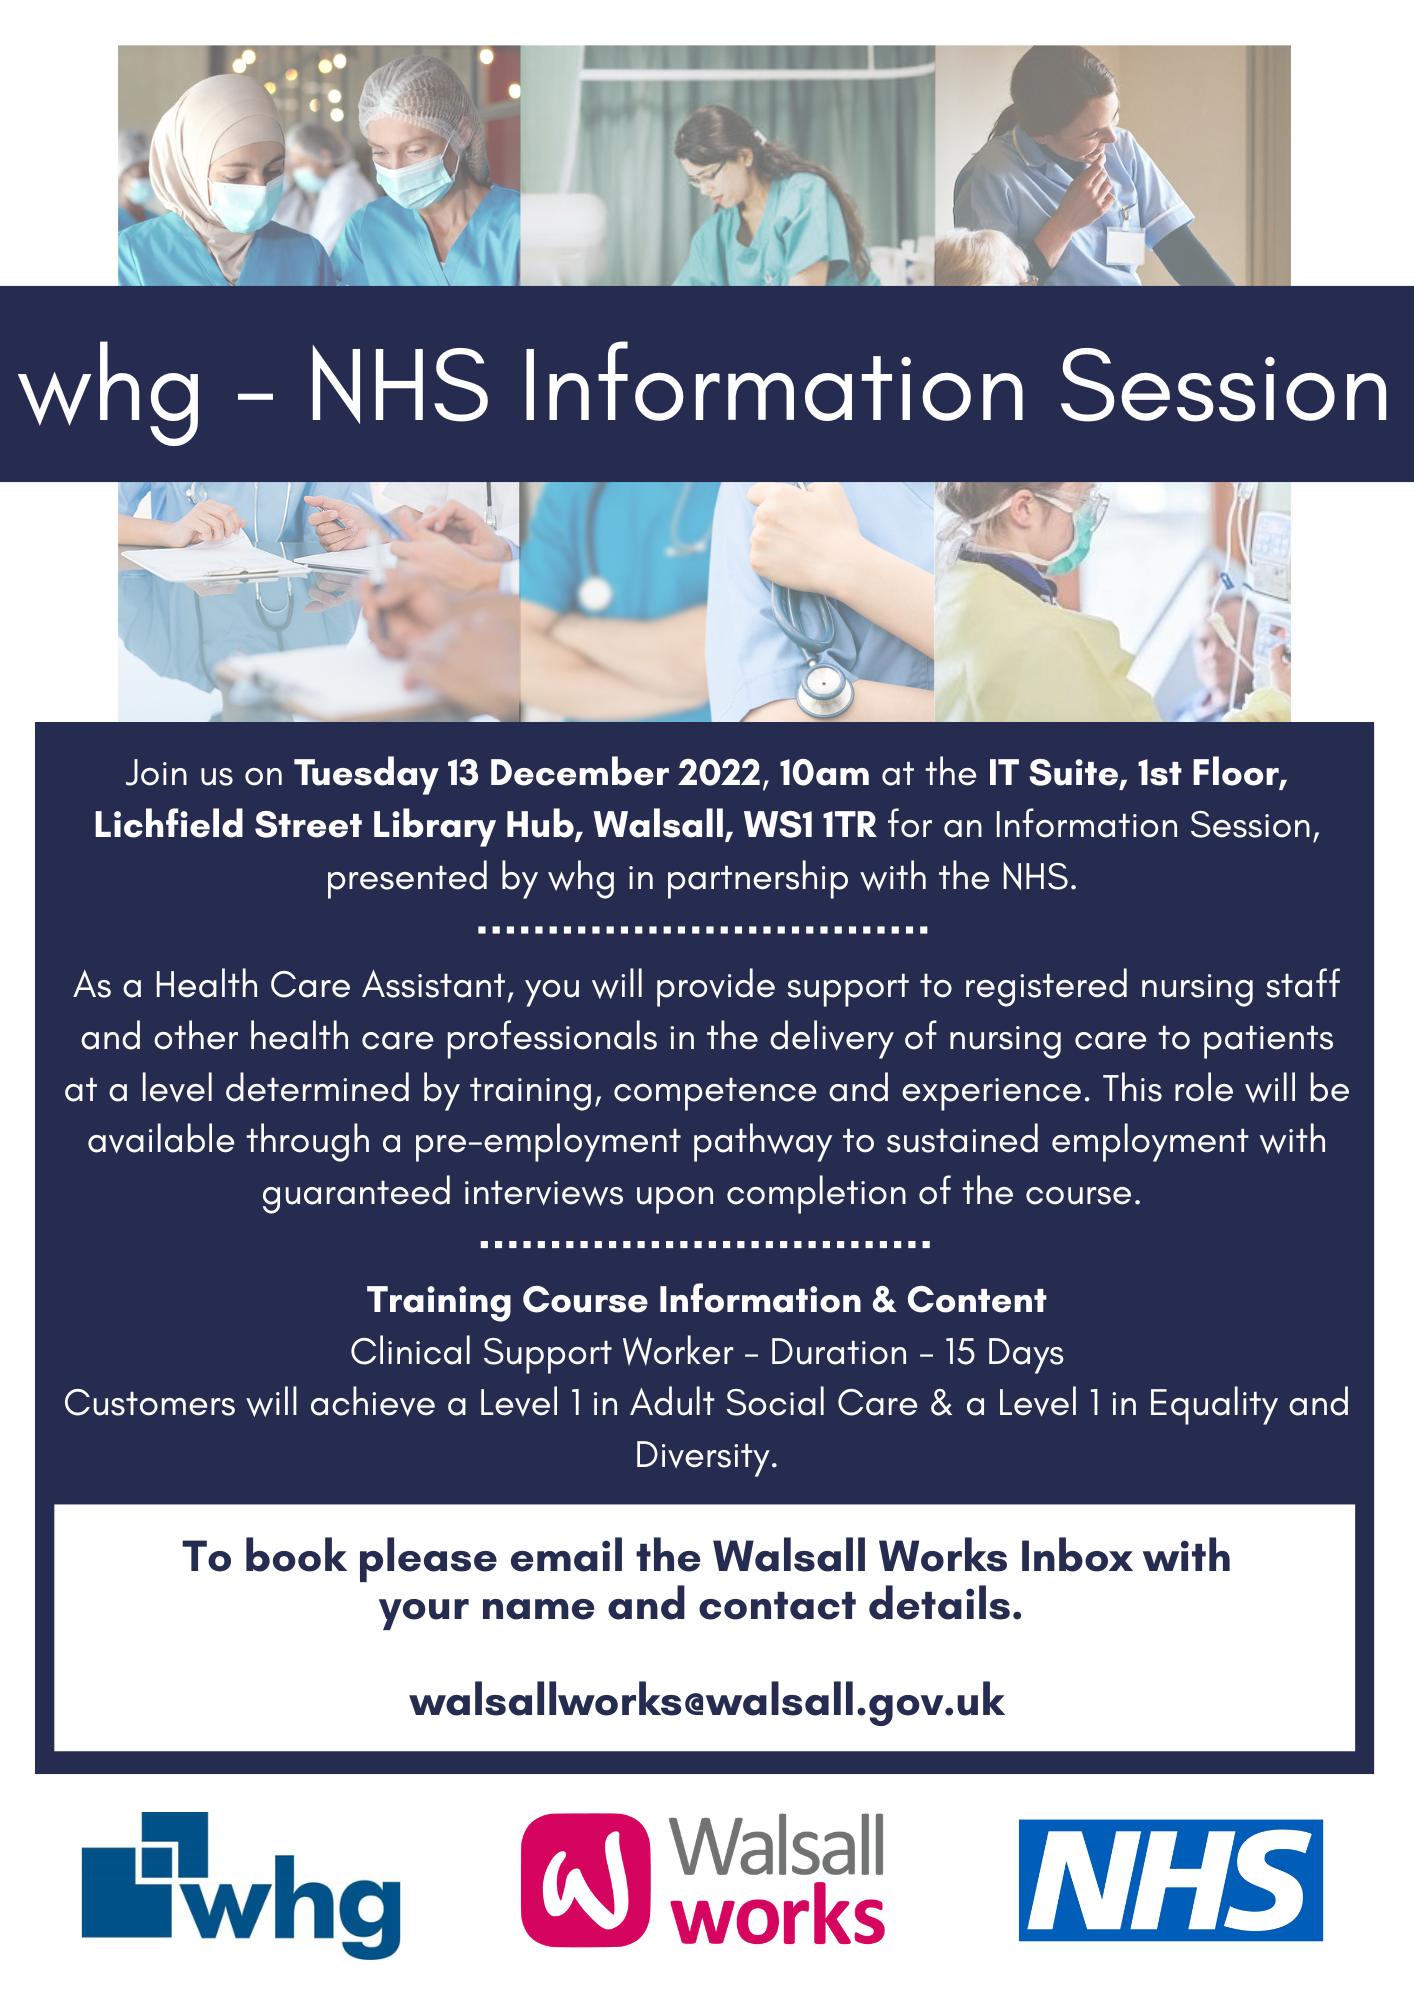 WHG - NHS information Session